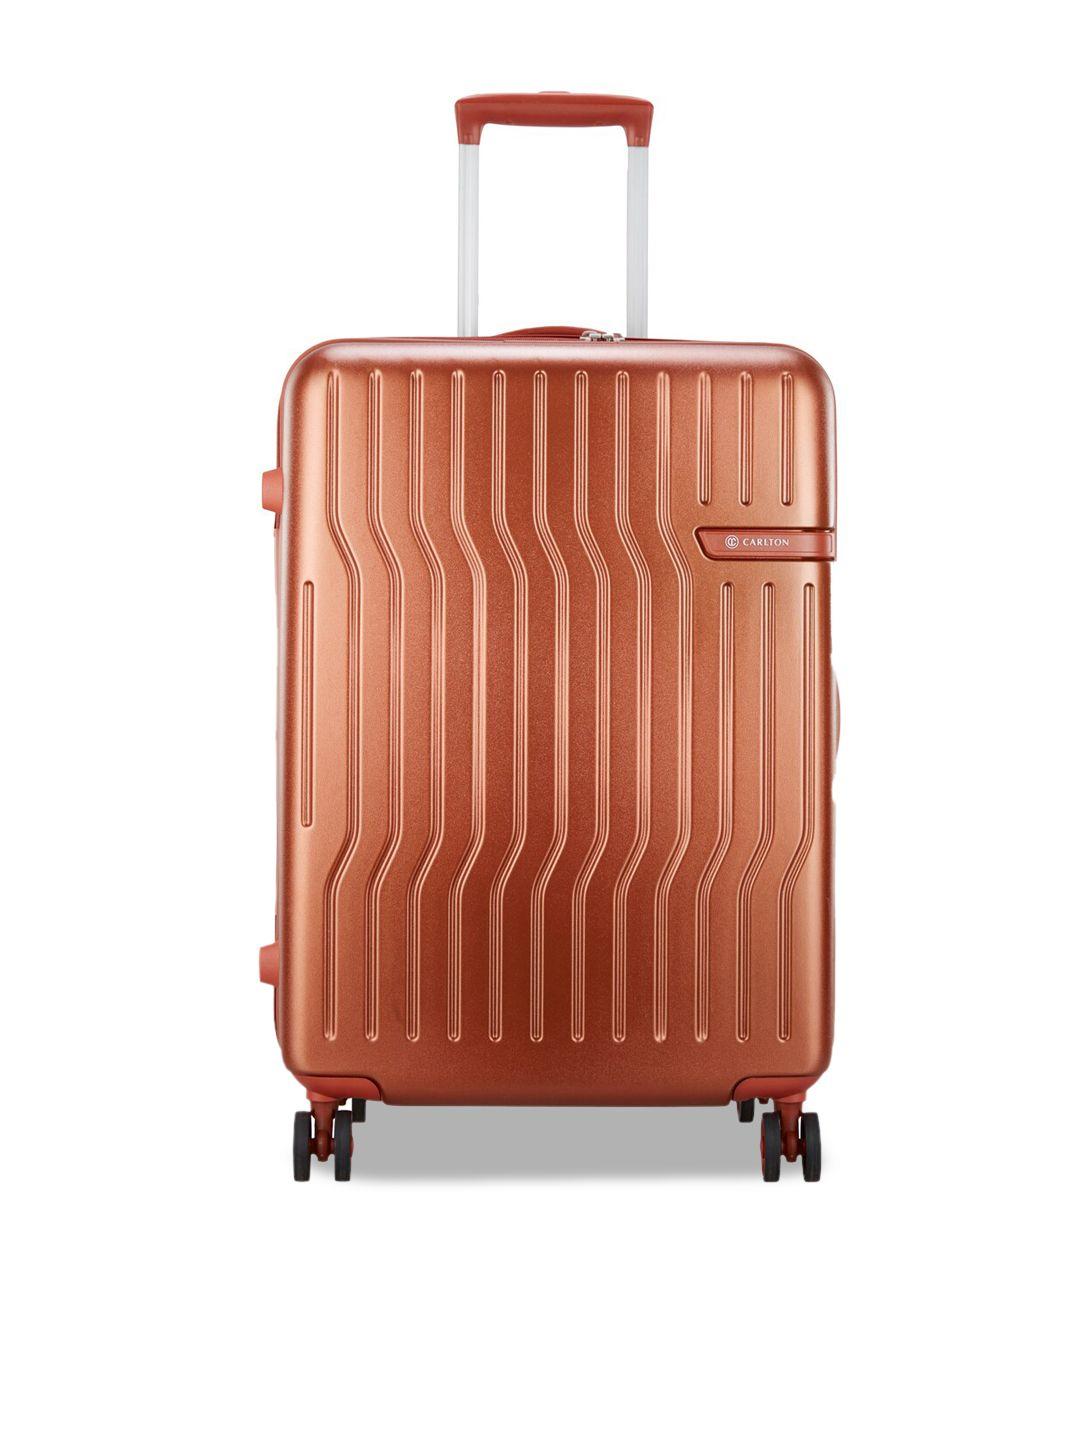 carlton textured hard-sided medium suitcase trolley bag